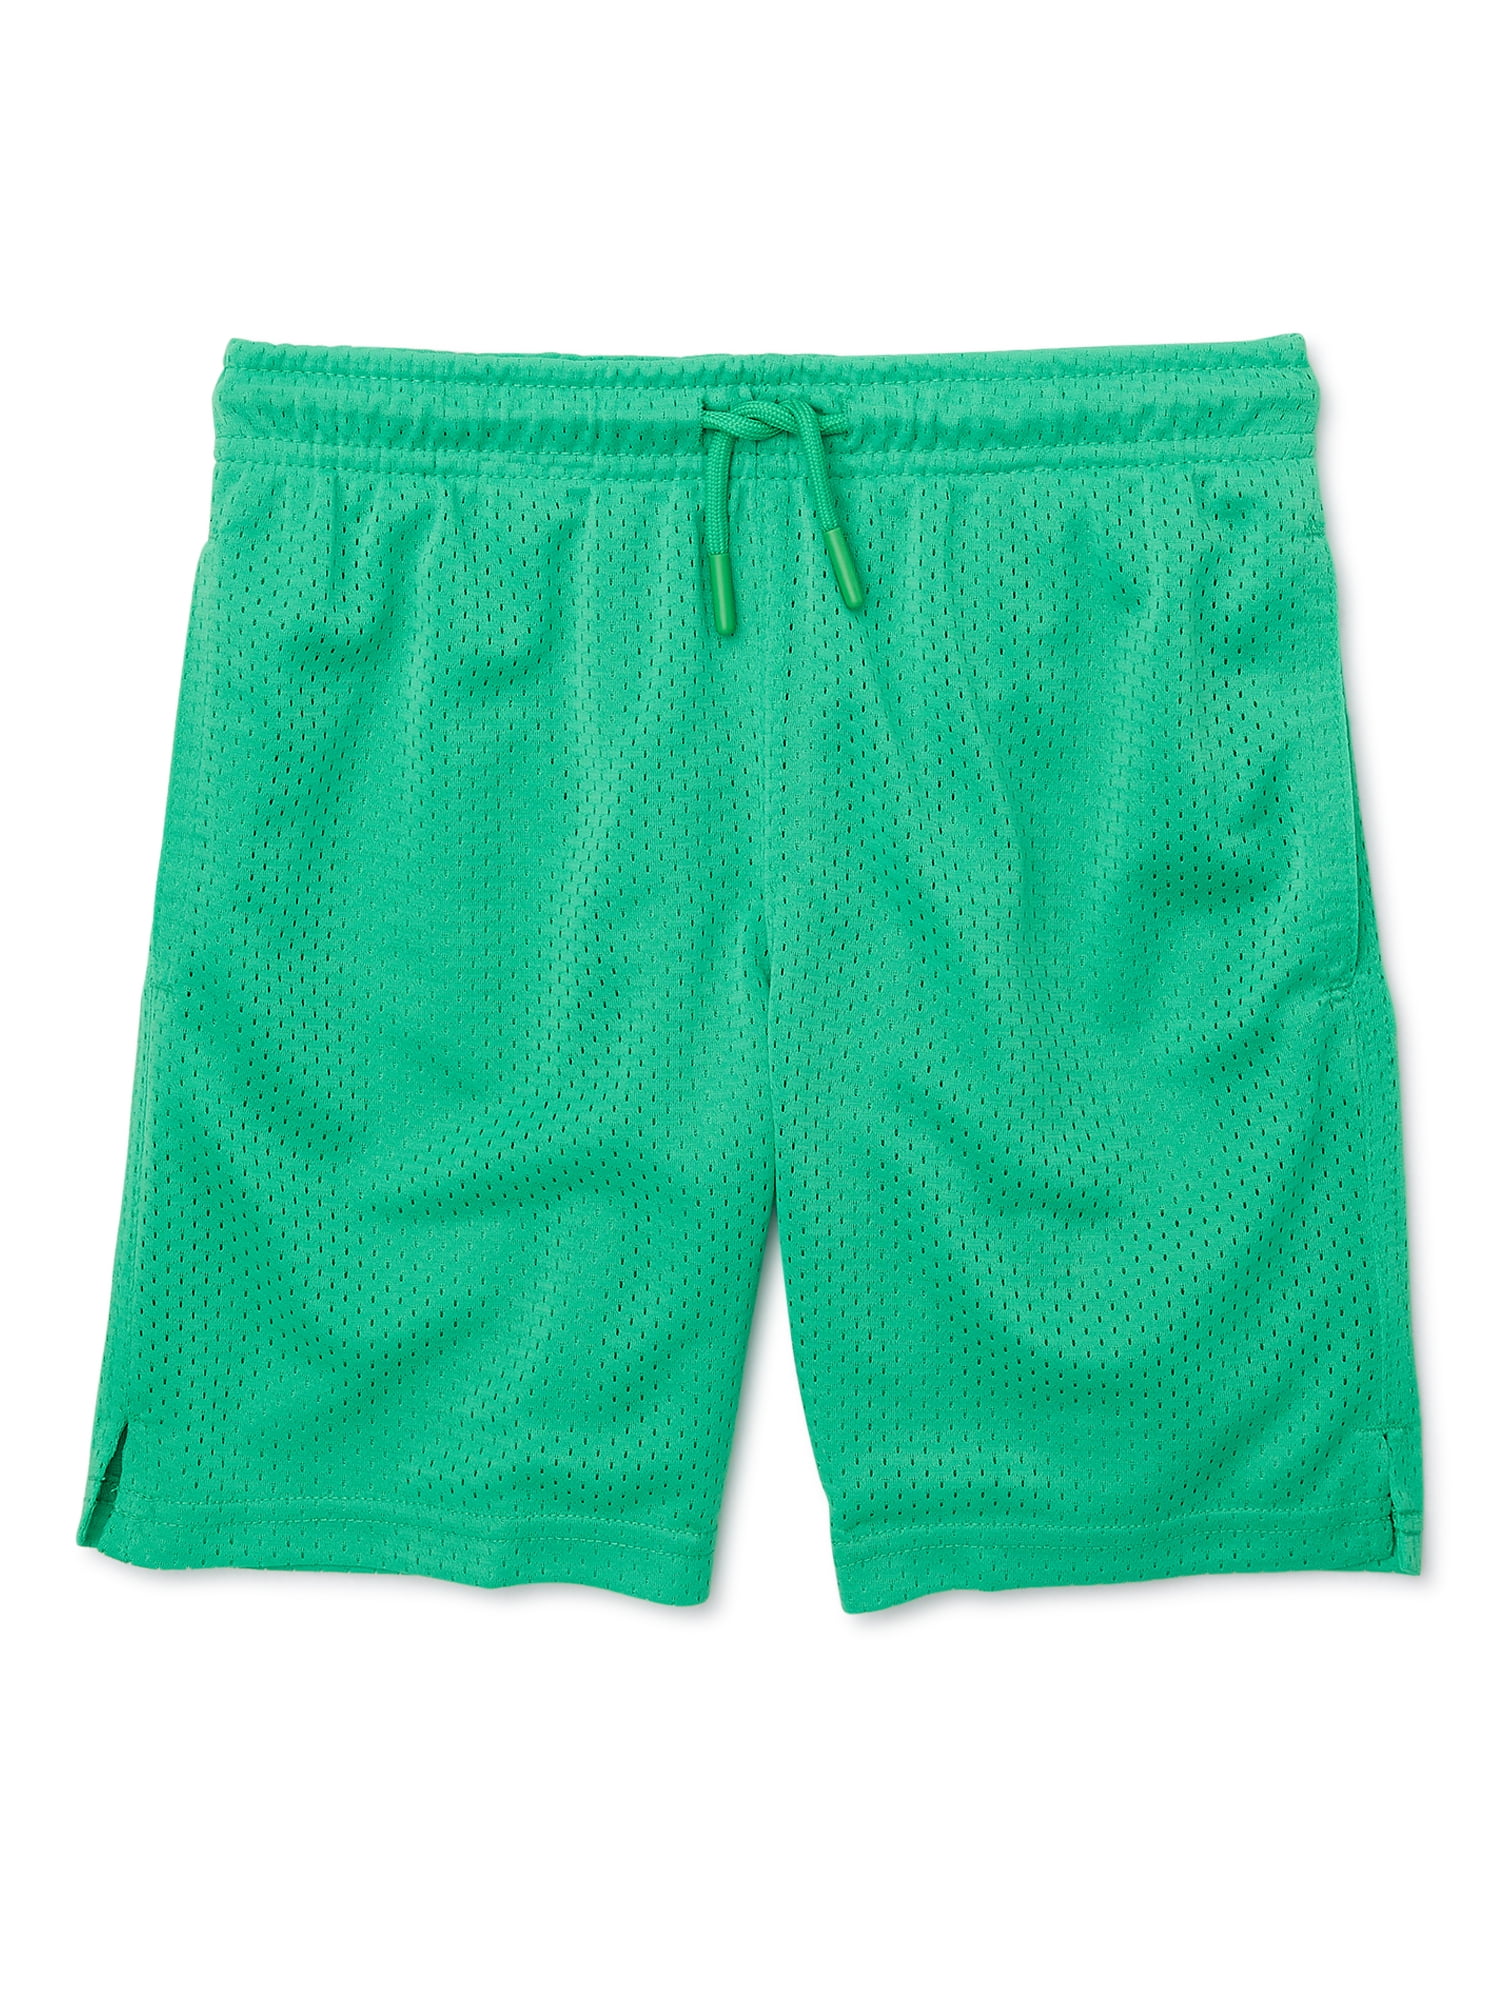 Athletic Works Boys Active Mesh Shorts, Sizes 4-18 & Husky - Walmart.com